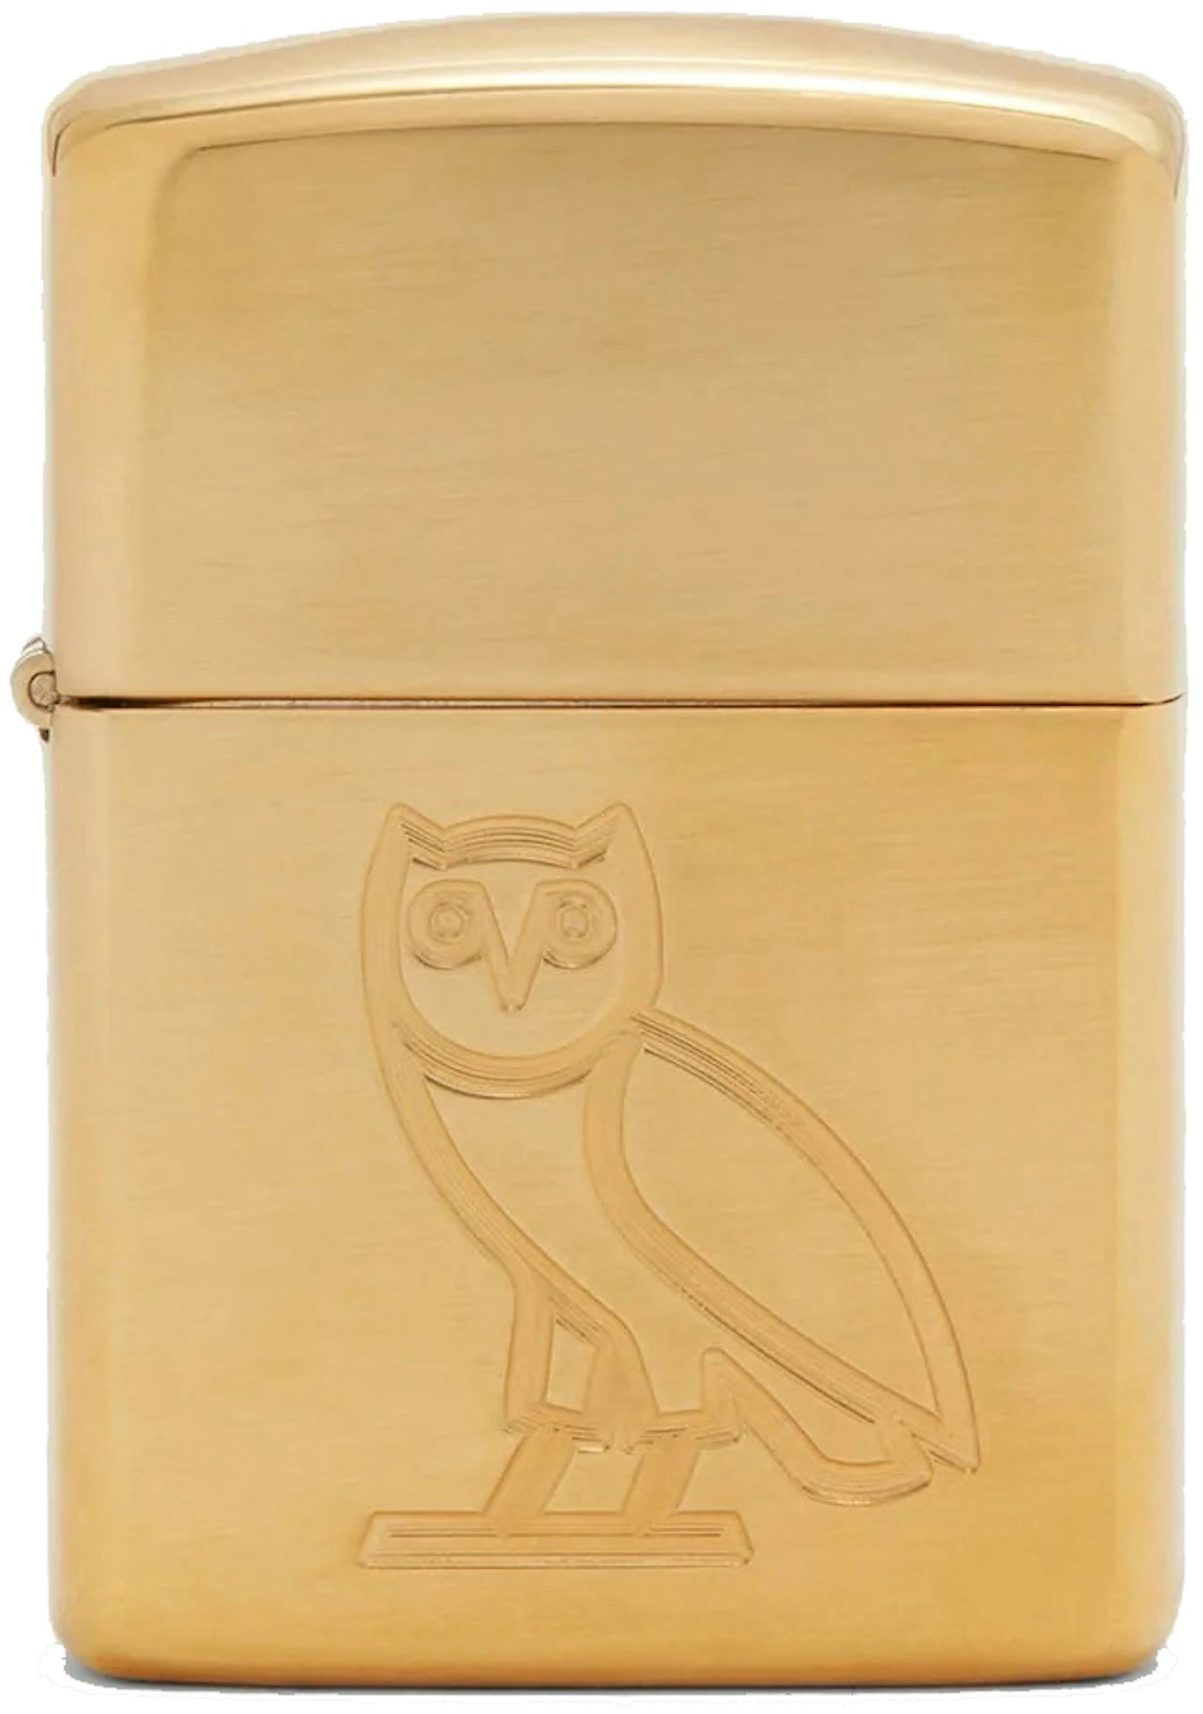 OVO Owl Bottle Opener Keychain Gold - SS22 - US